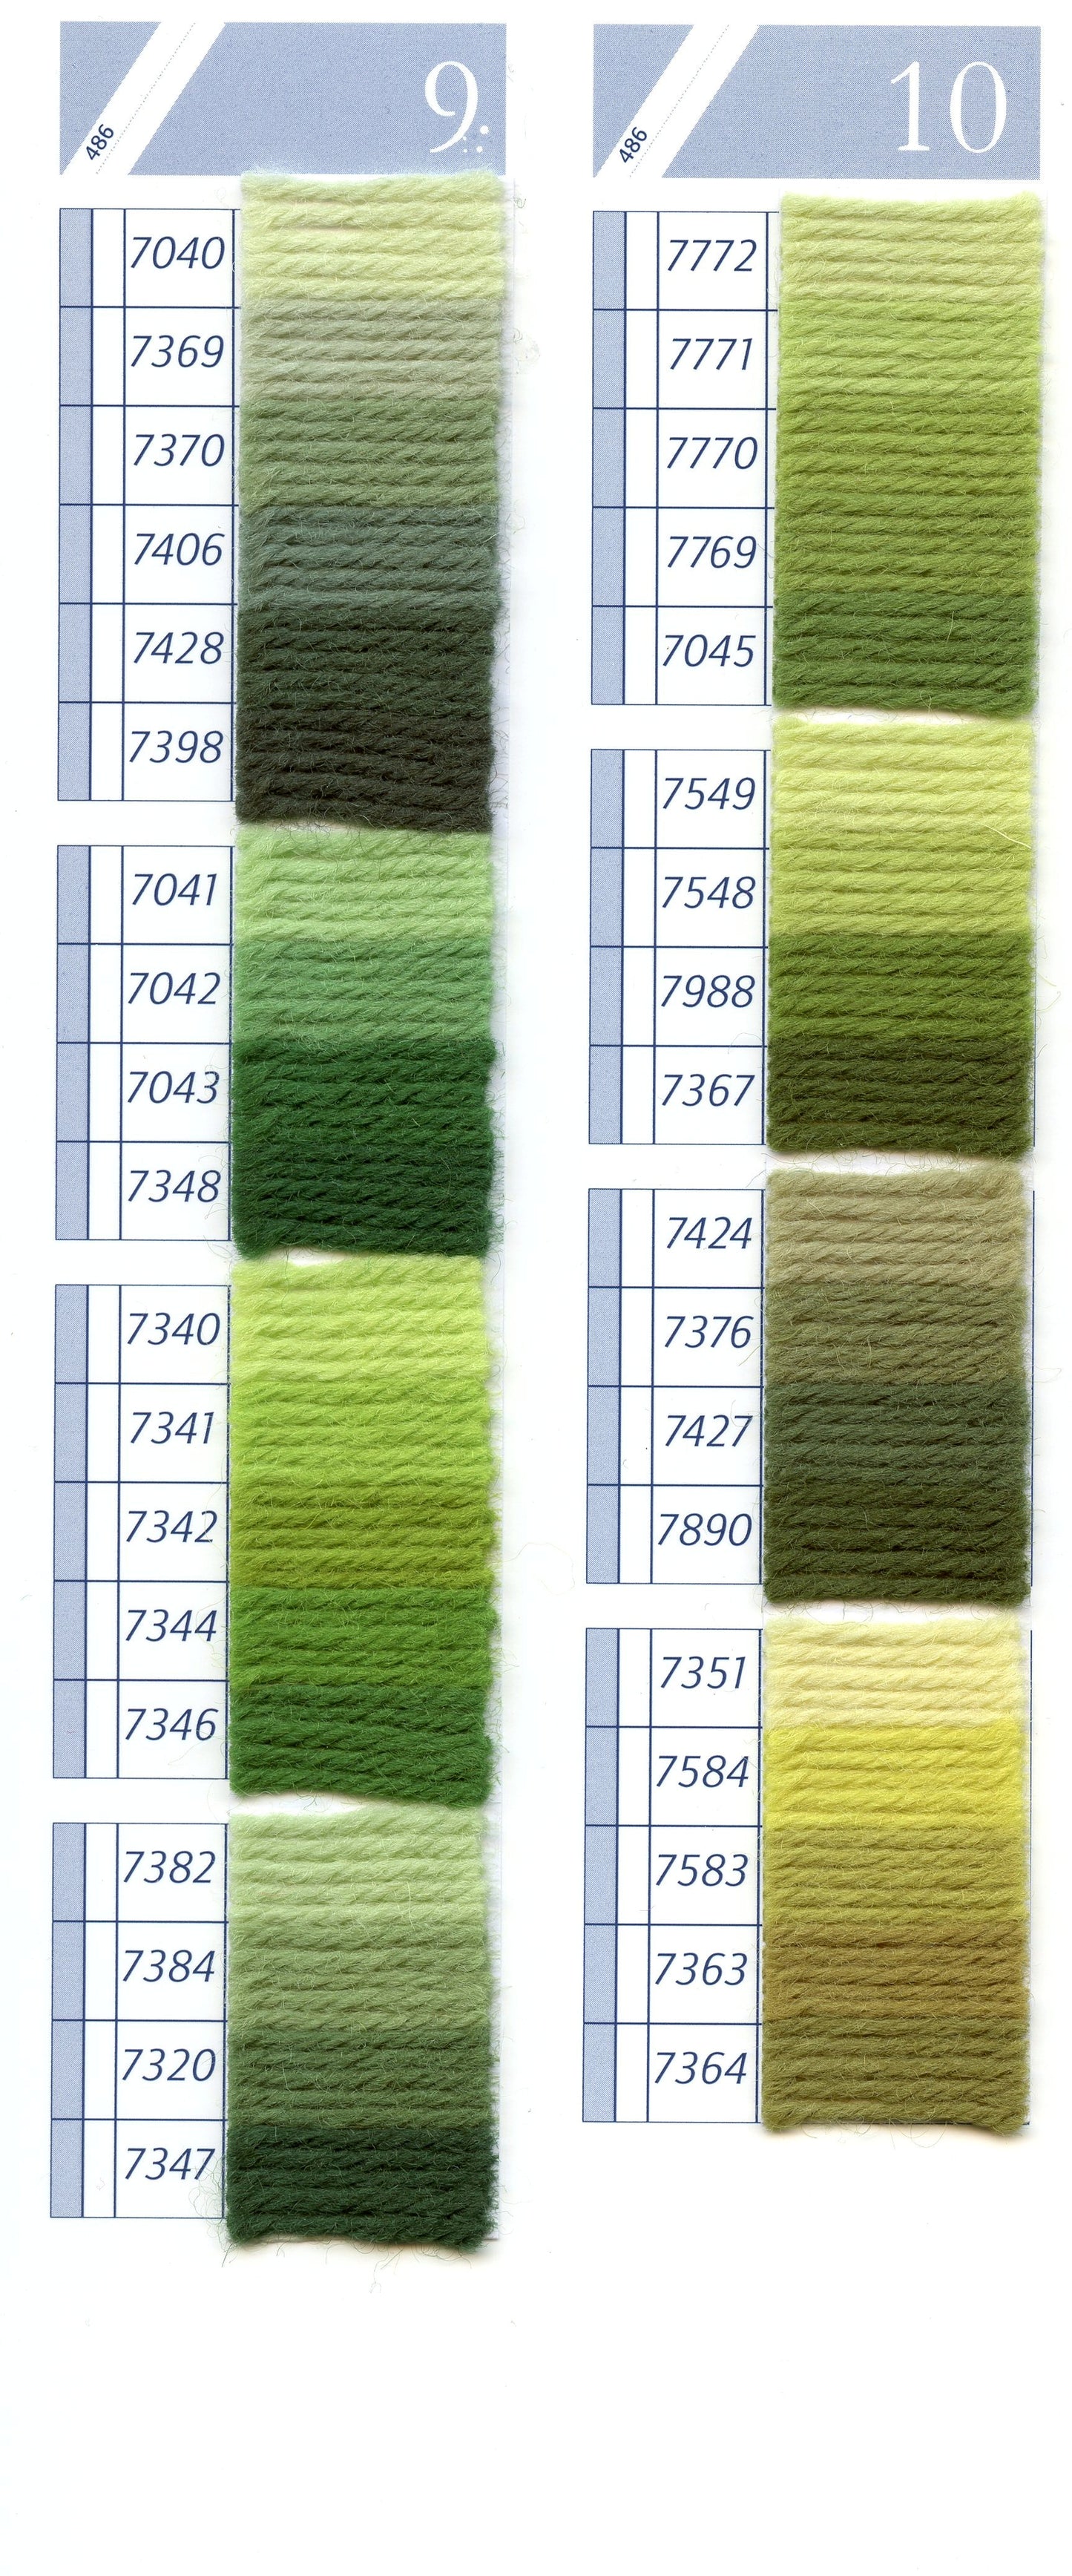 DMC Tapestry Wool Chart - Columns 9 & 10